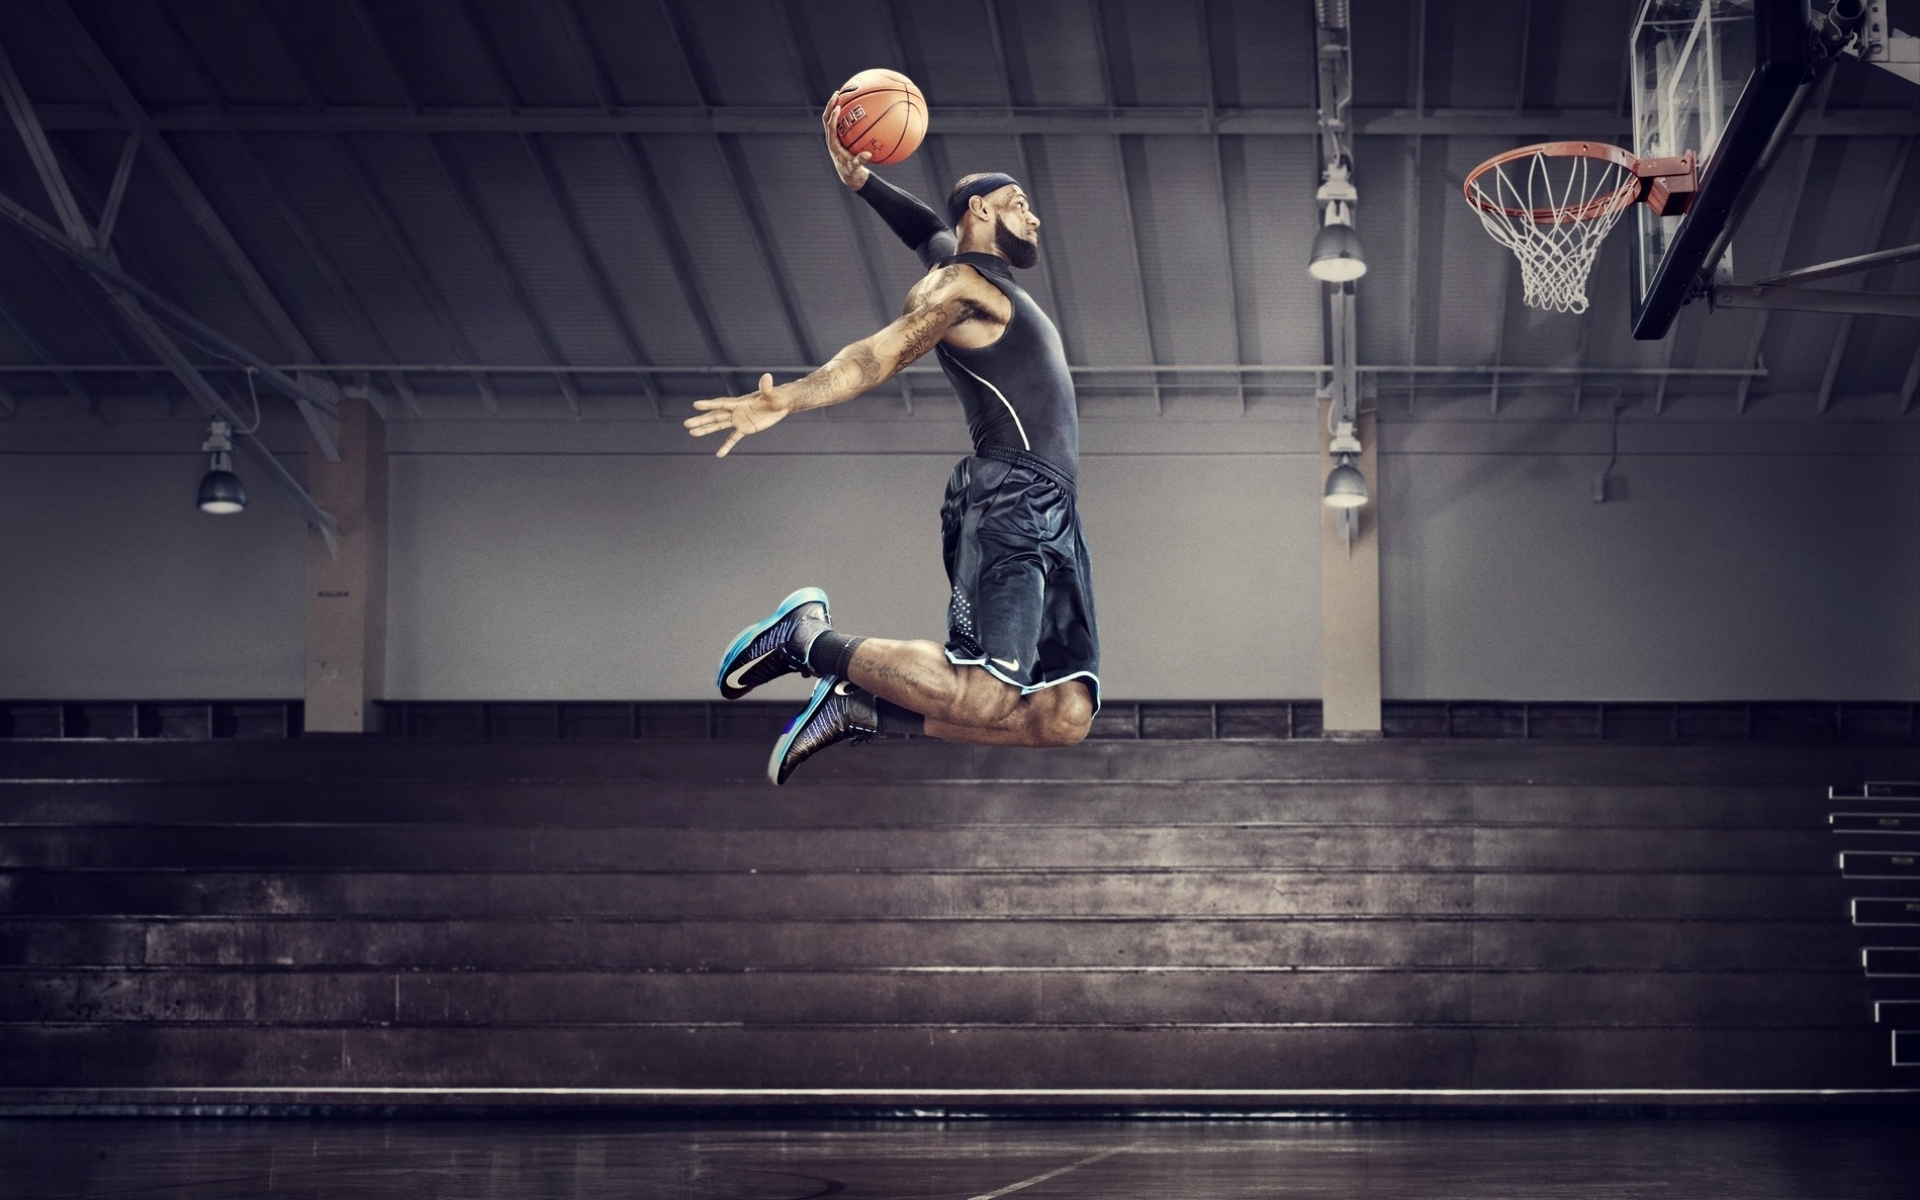 lebron james dunk fond d'écran,mouvements de basket ball,joueur de basketball,basketball,football freestyle,slam dunk